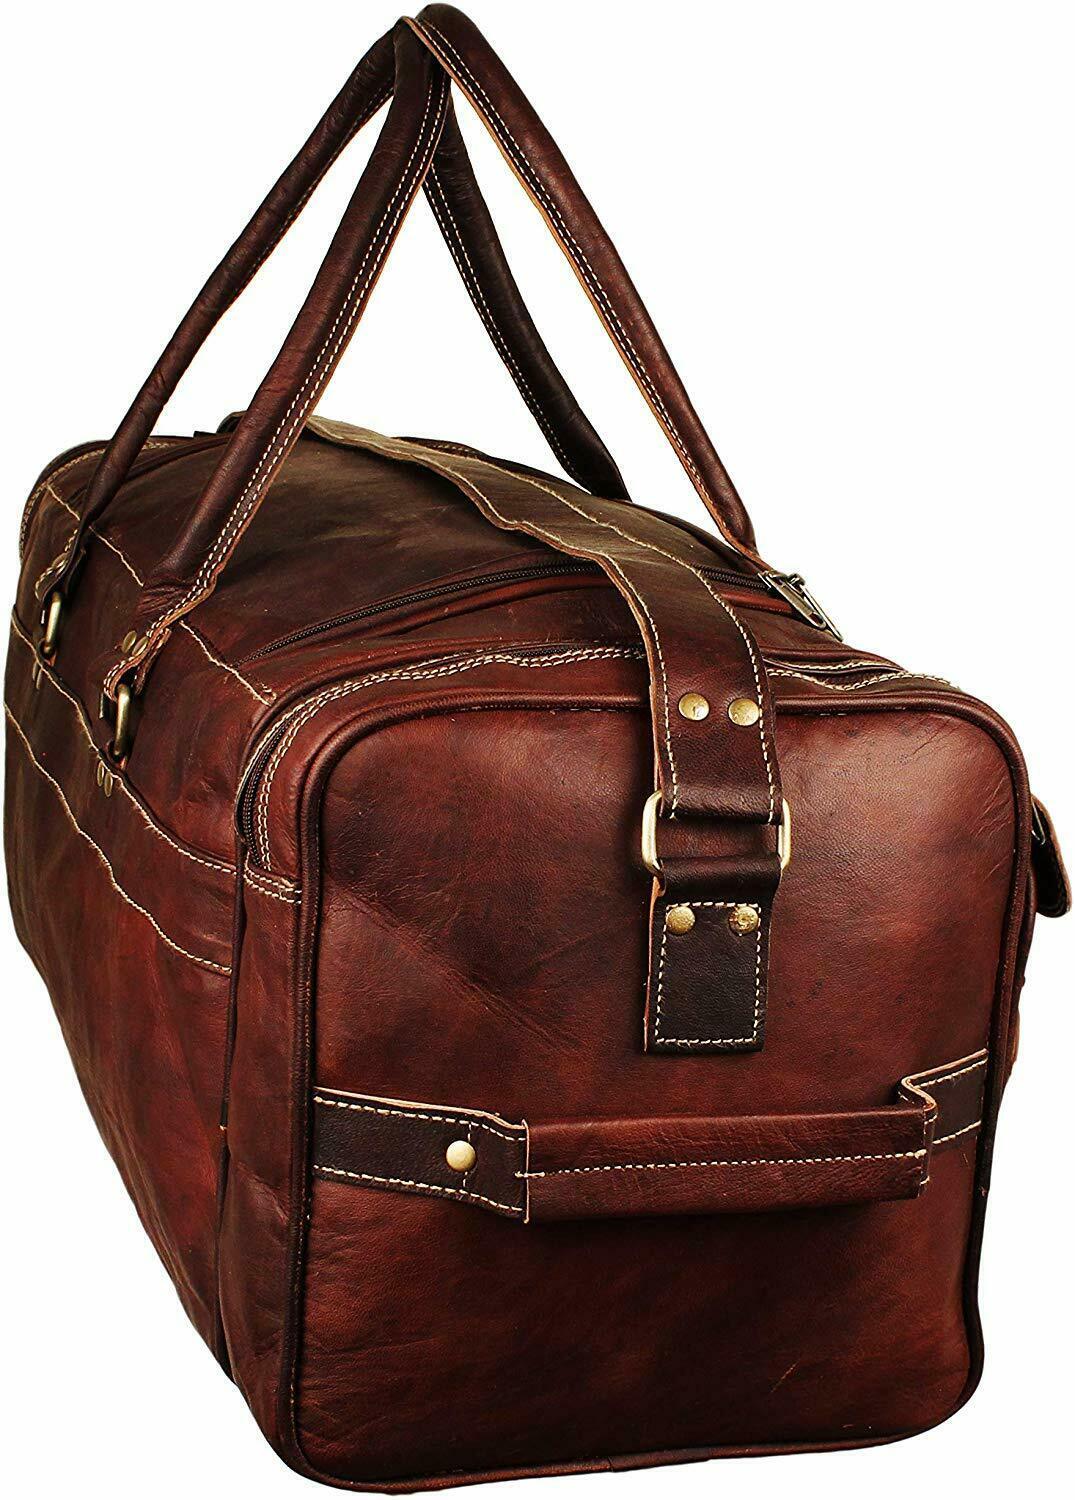 travel bag for sale winnipeg